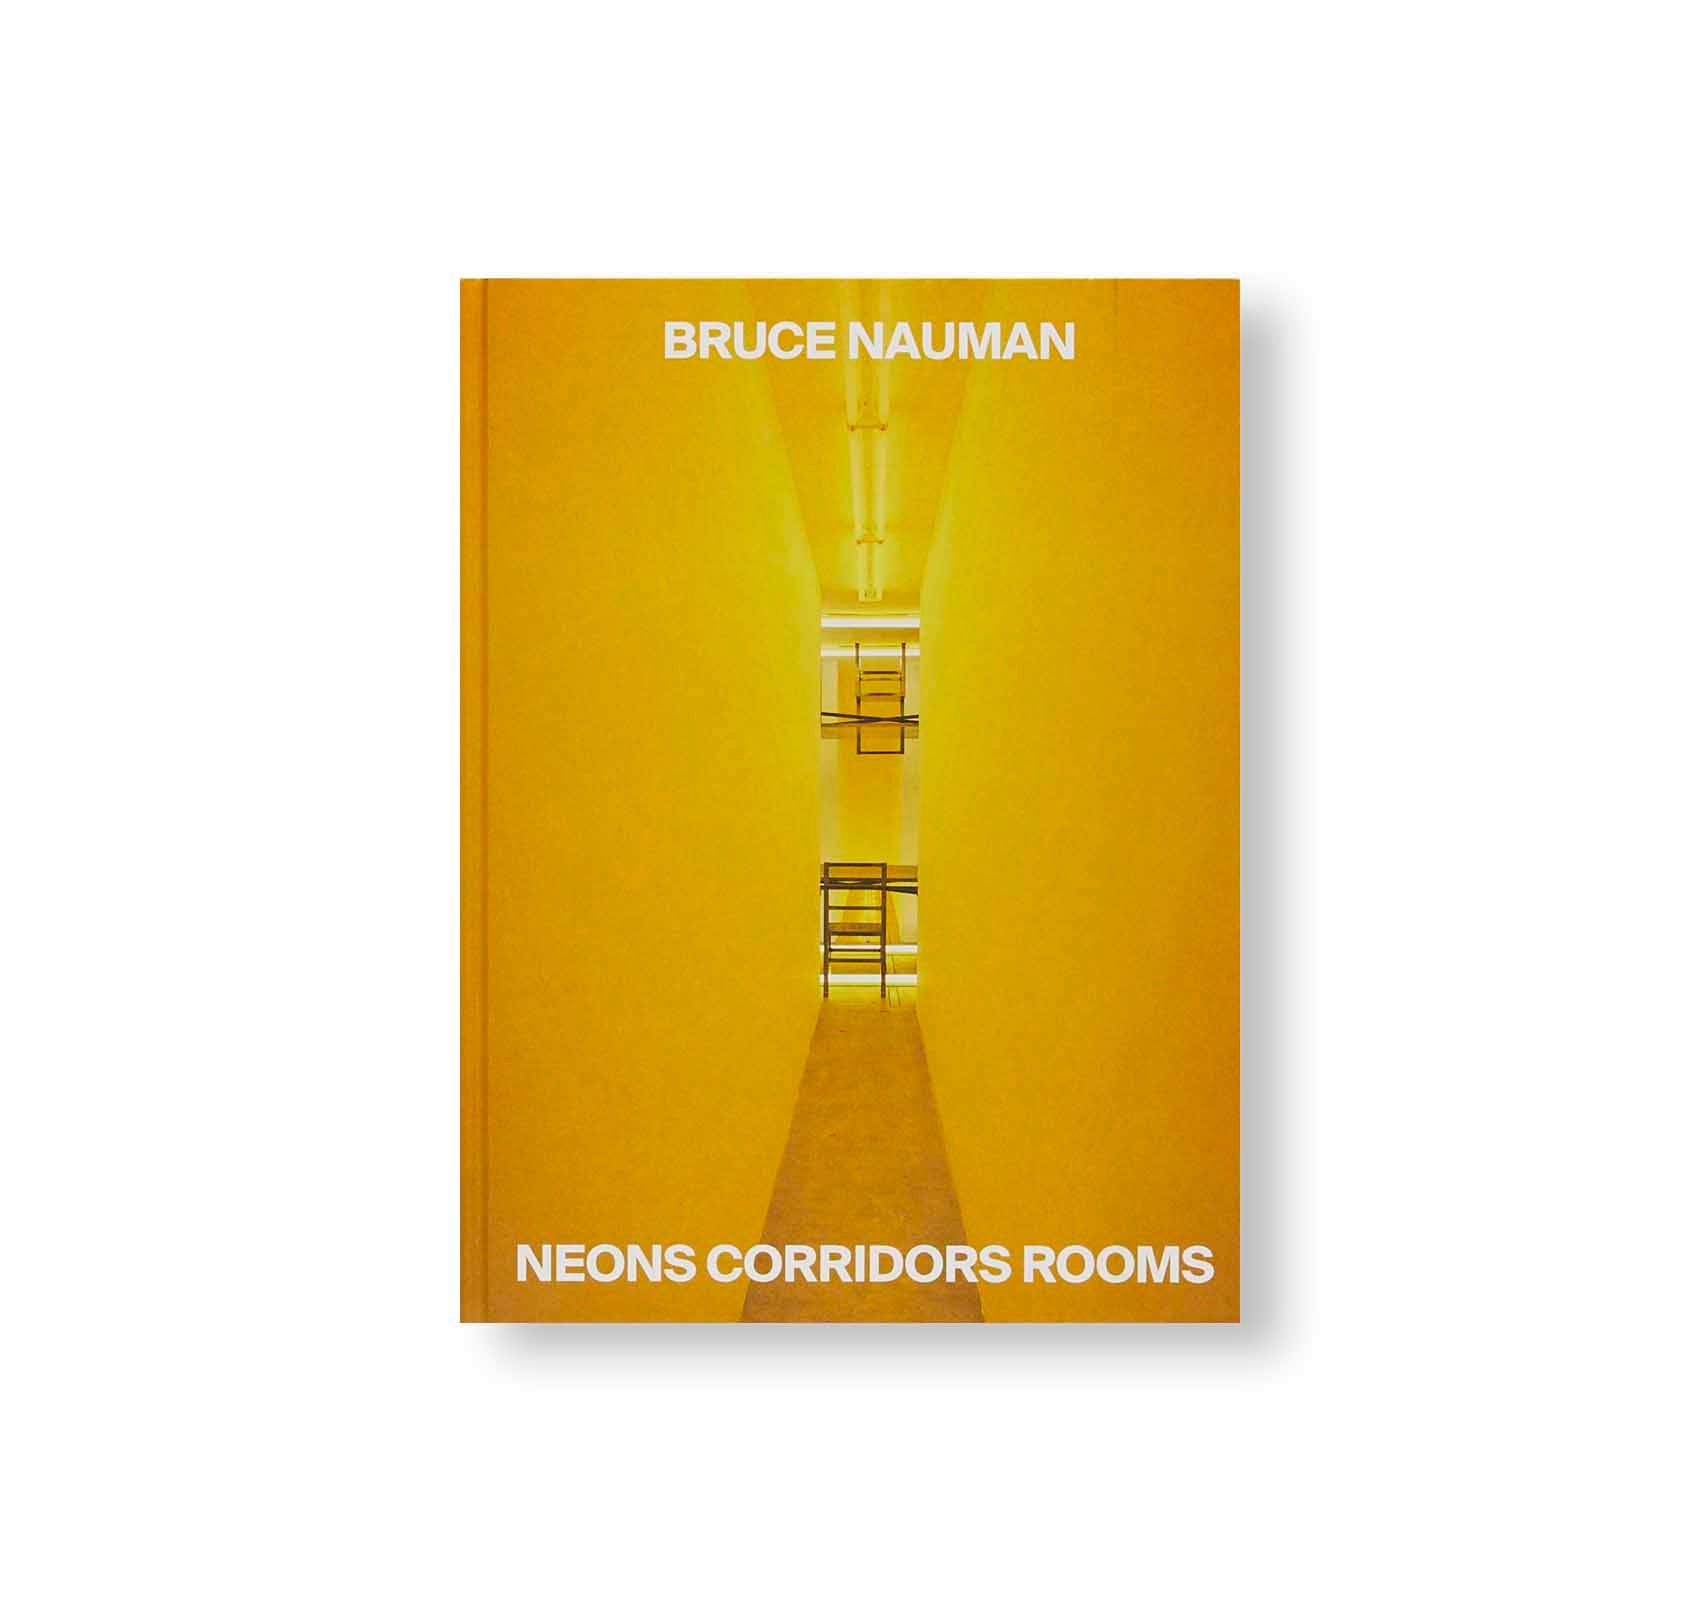 NEONS CORRIDORS ROOMS by Bruce Nauman